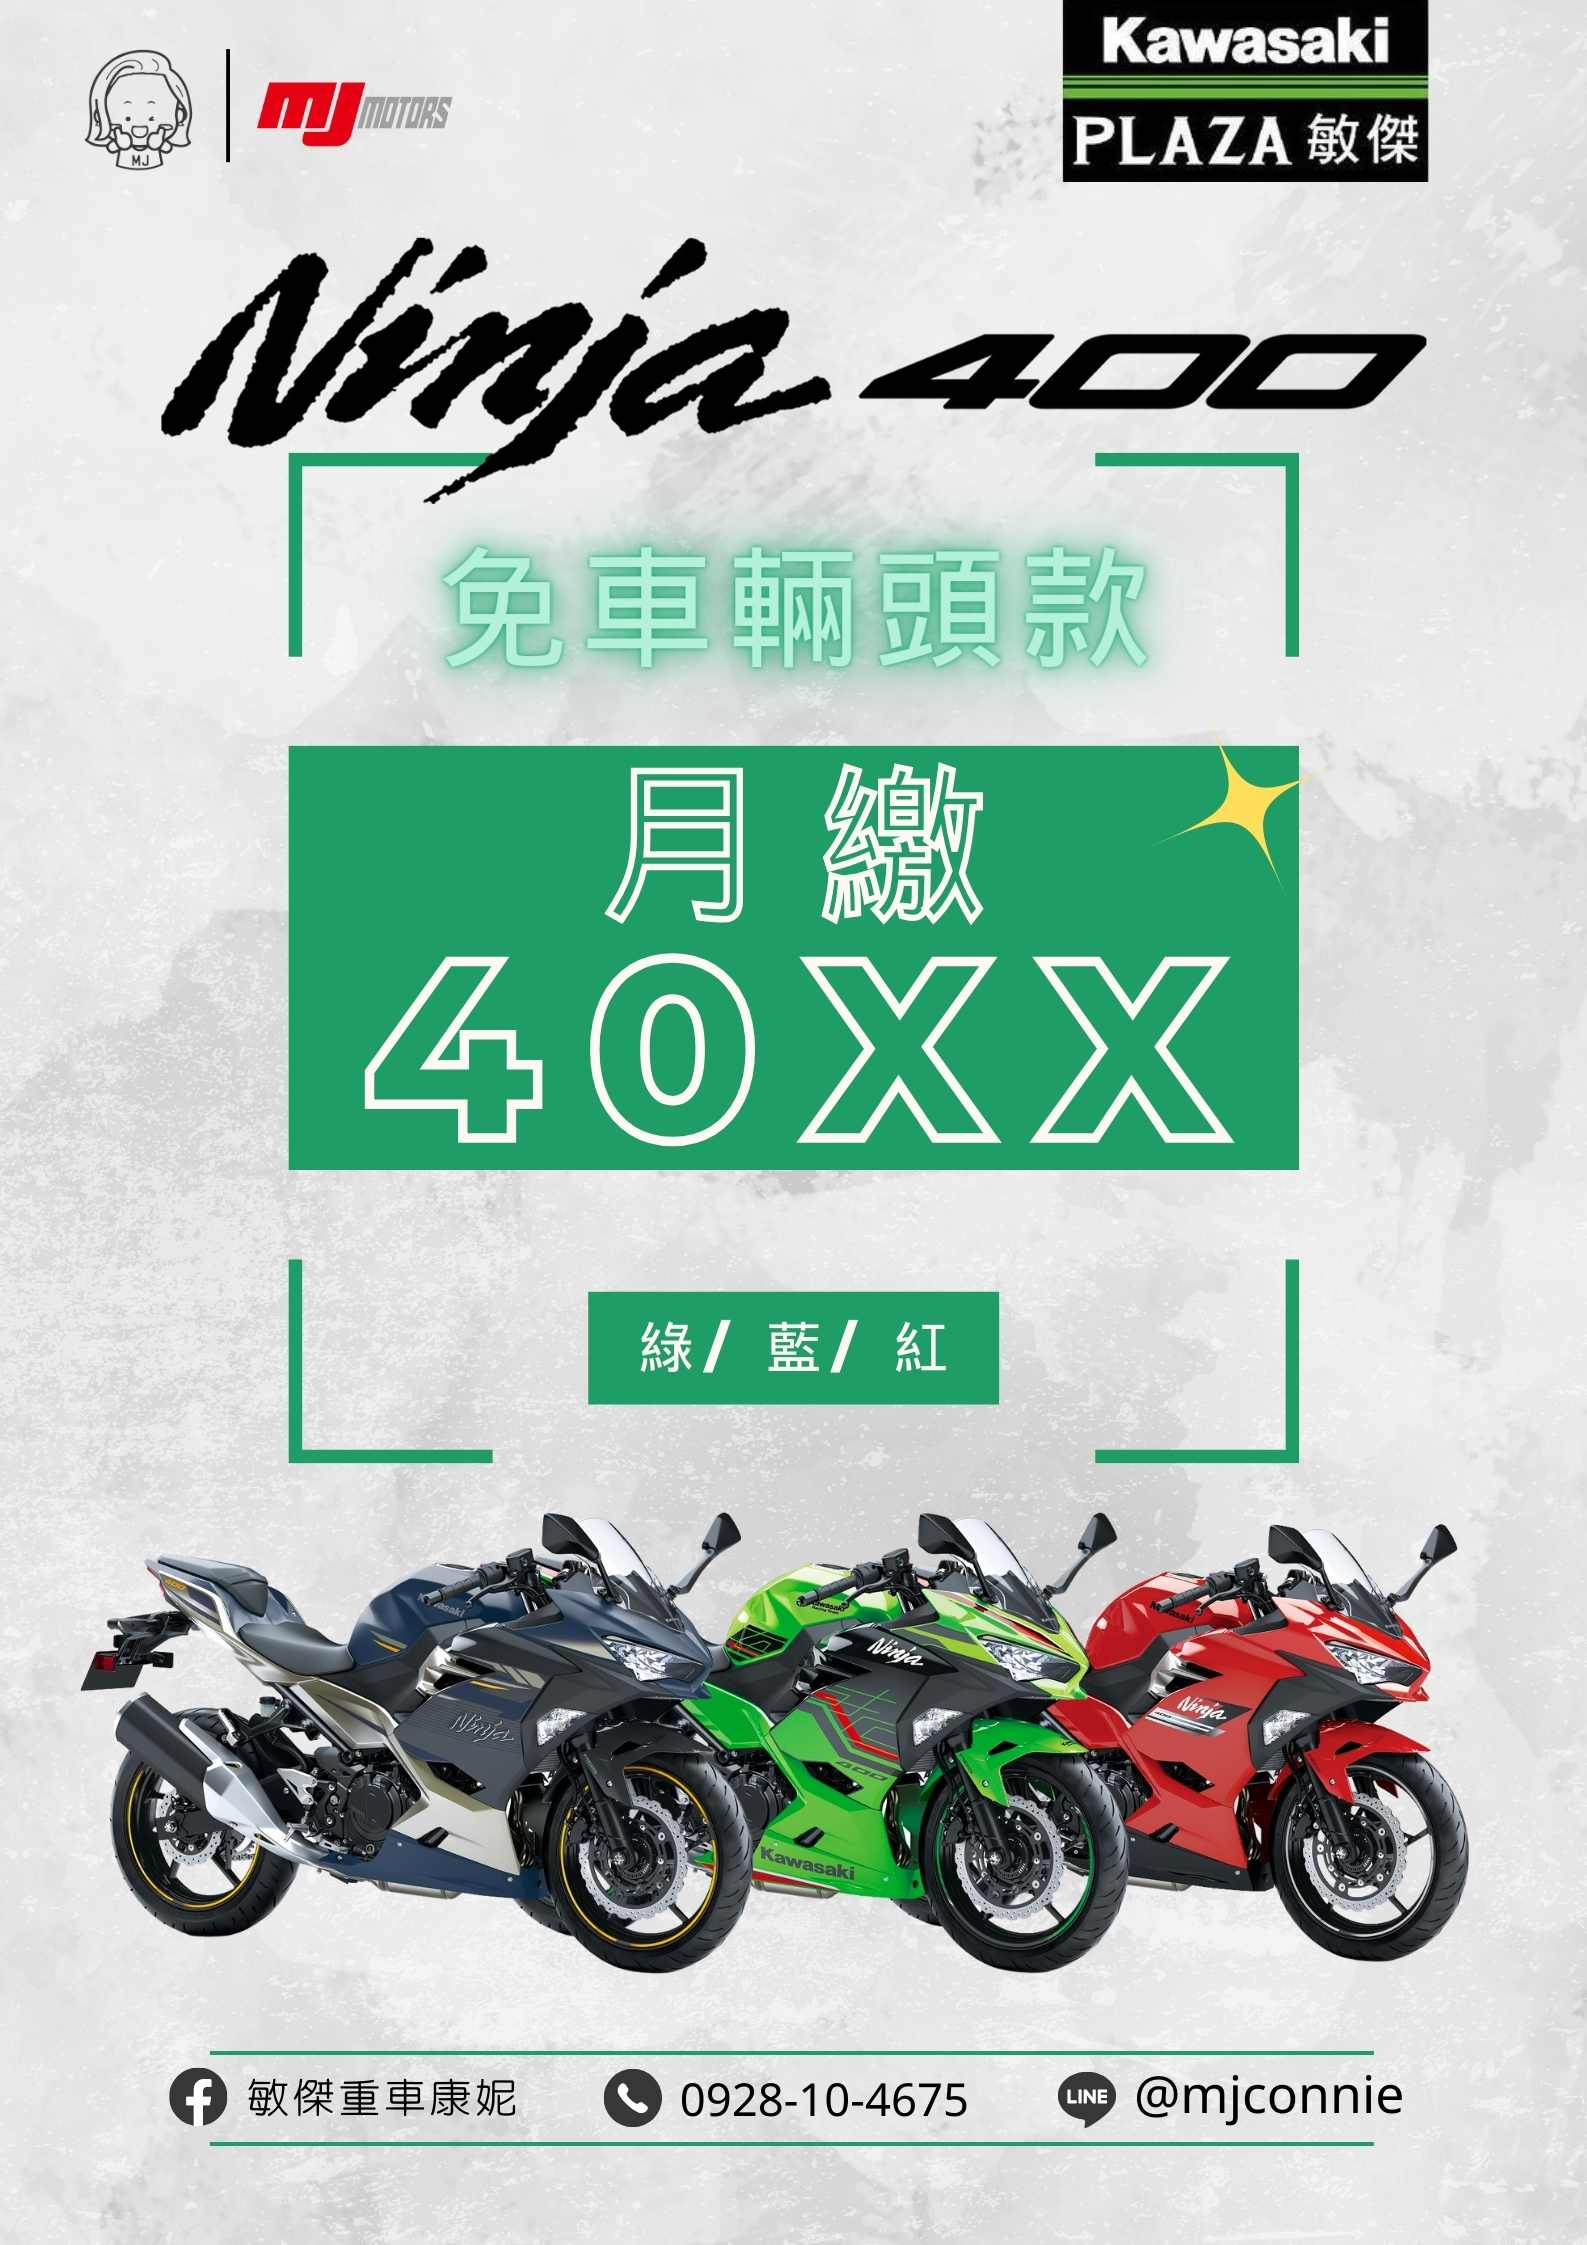 KAWASAKI NINJA400新車出售中 『敏傑康妮』Kawasaki Ninja400 最好上手的黃牌仿賽 三年保固 不限里程 給你最棒的方案 最優的服務 | 敏傑車業資深銷售專員 康妮 Connie